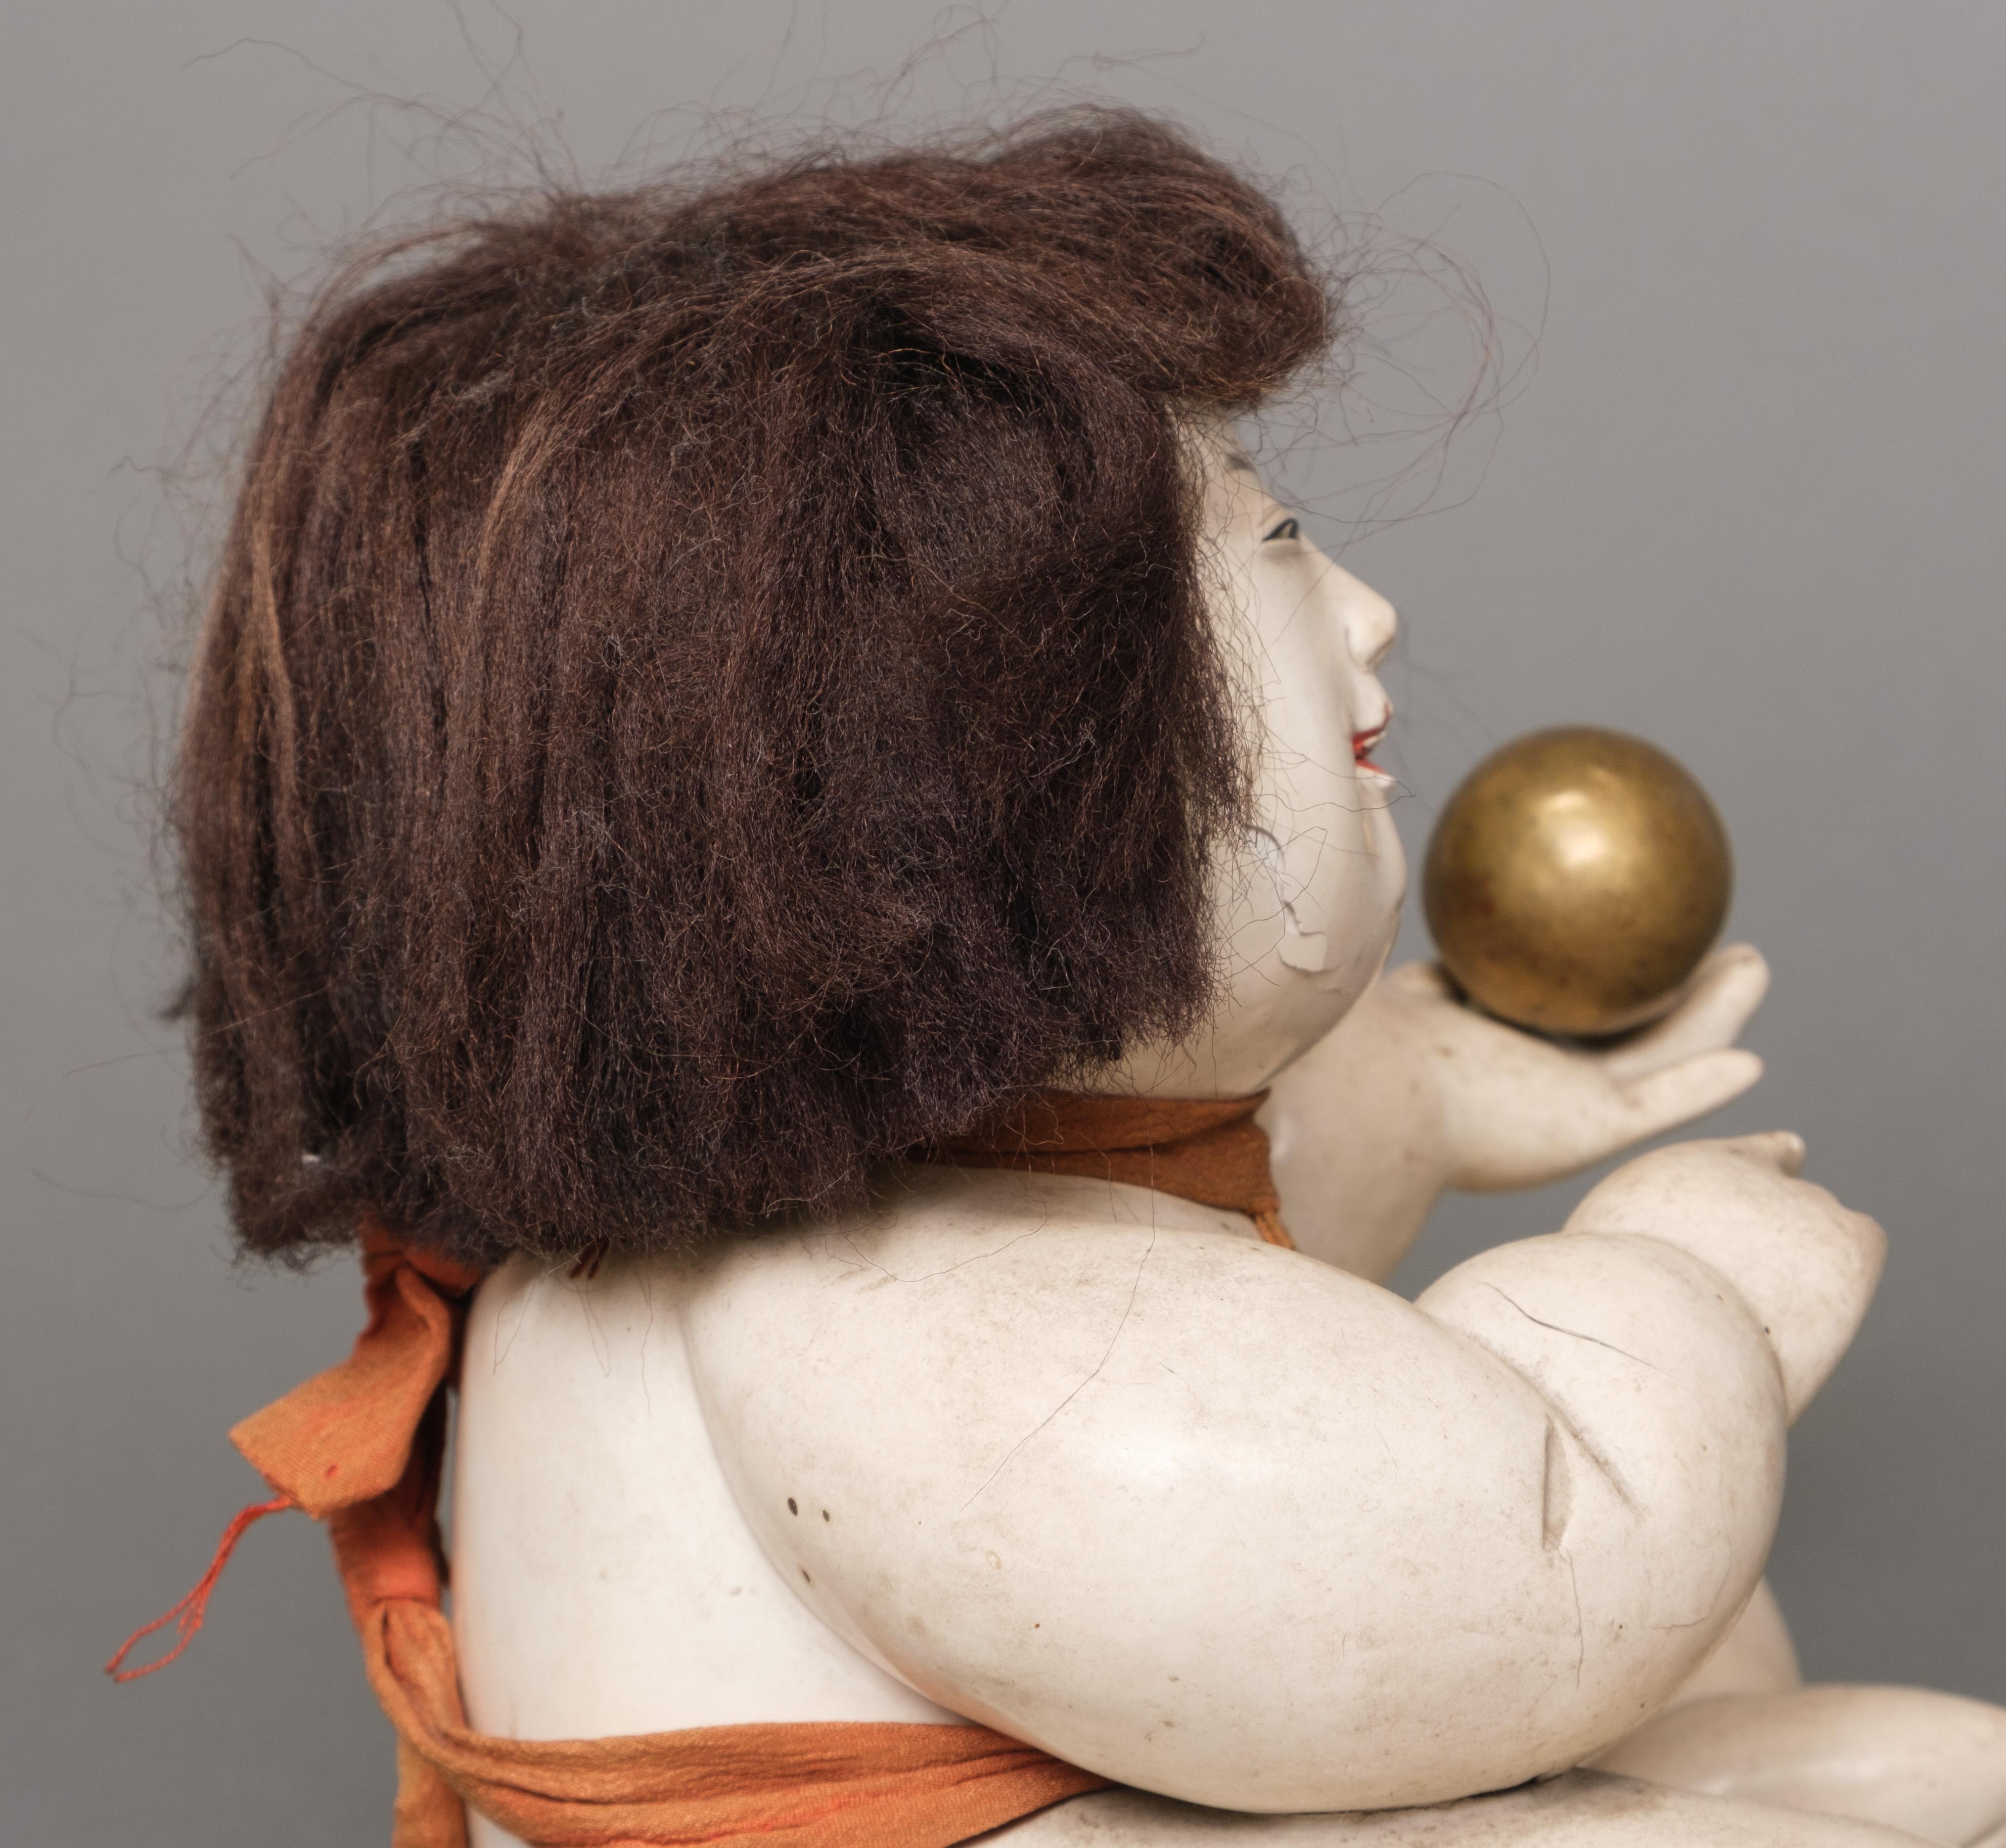 Paste Japanese Edo-period gosho’ningyô 御所人形 (palace doll) of plump, seated child For Sale